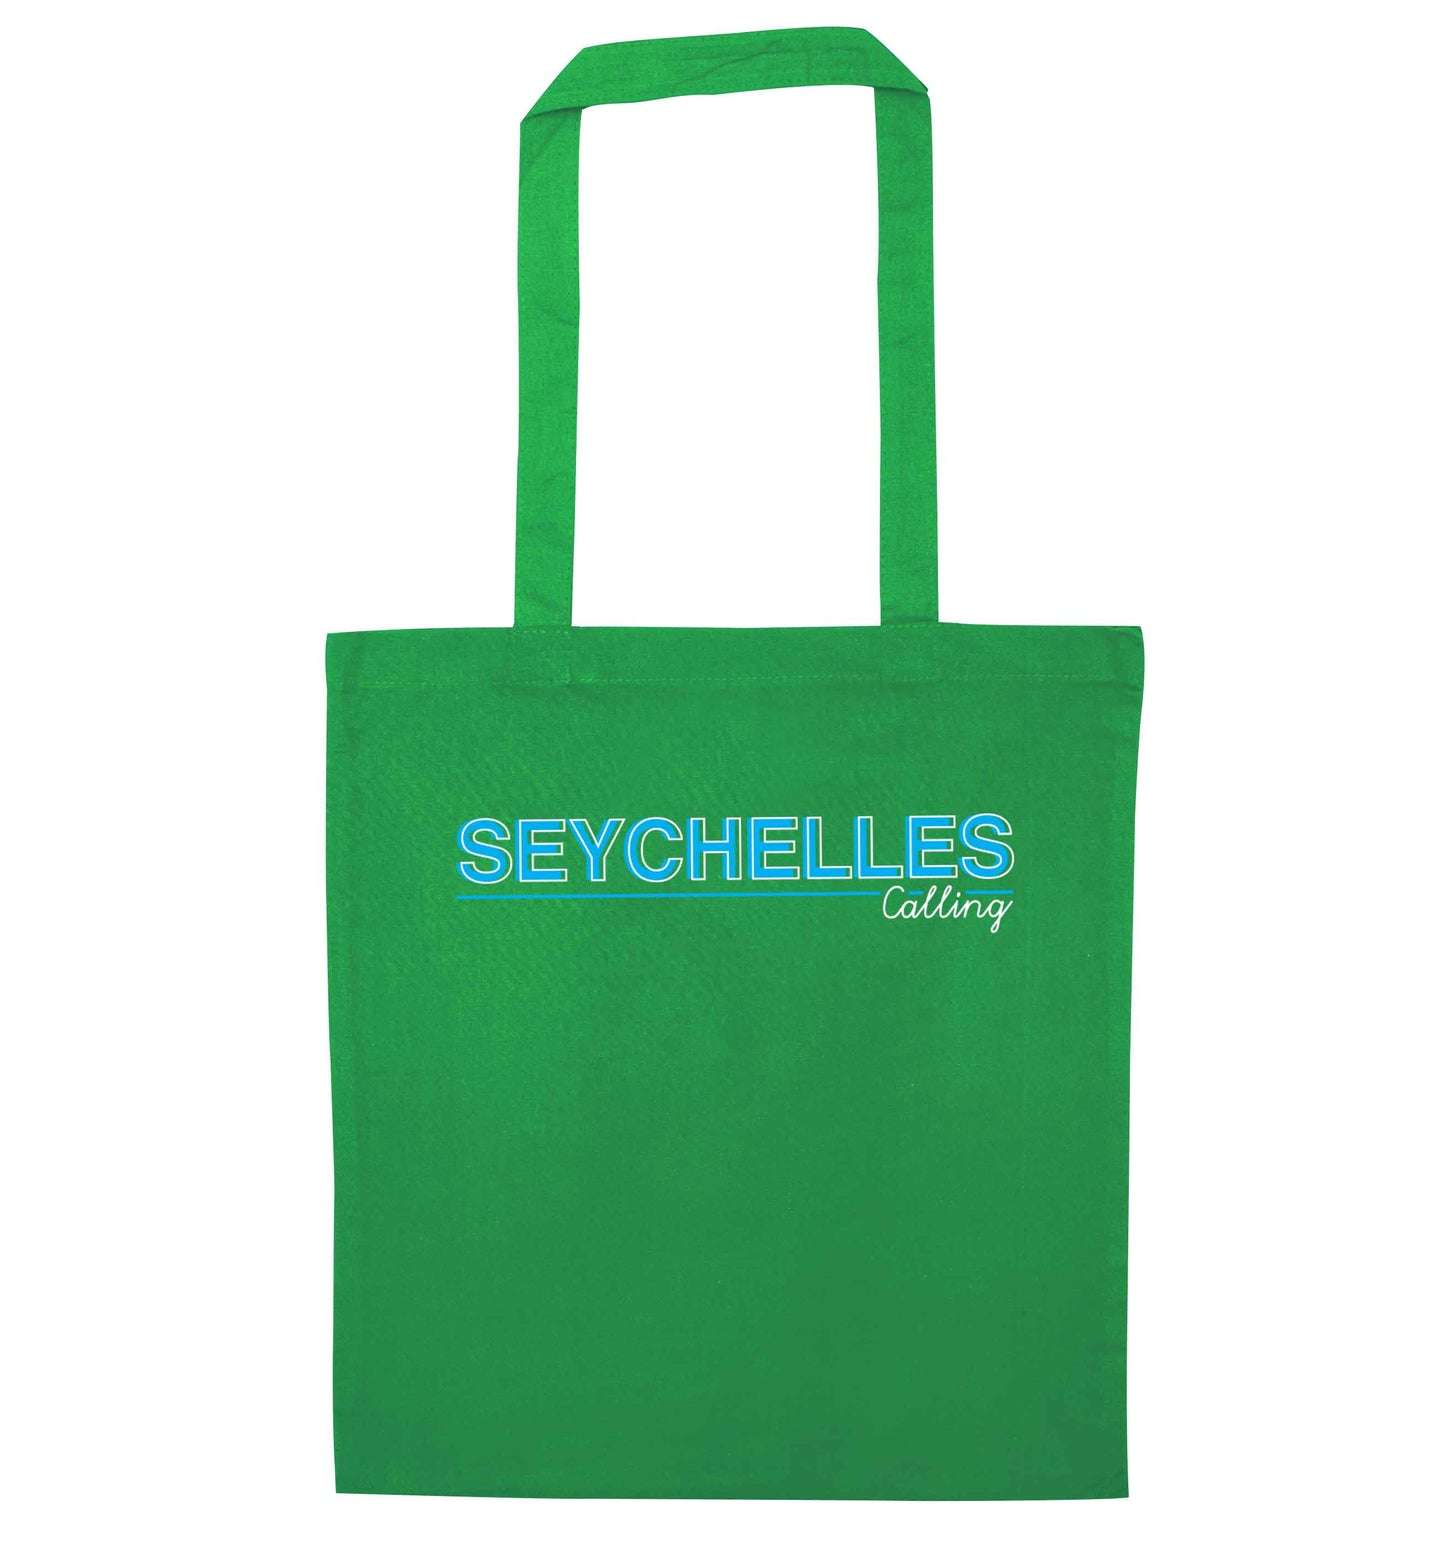 Seychelles calling green tote bag